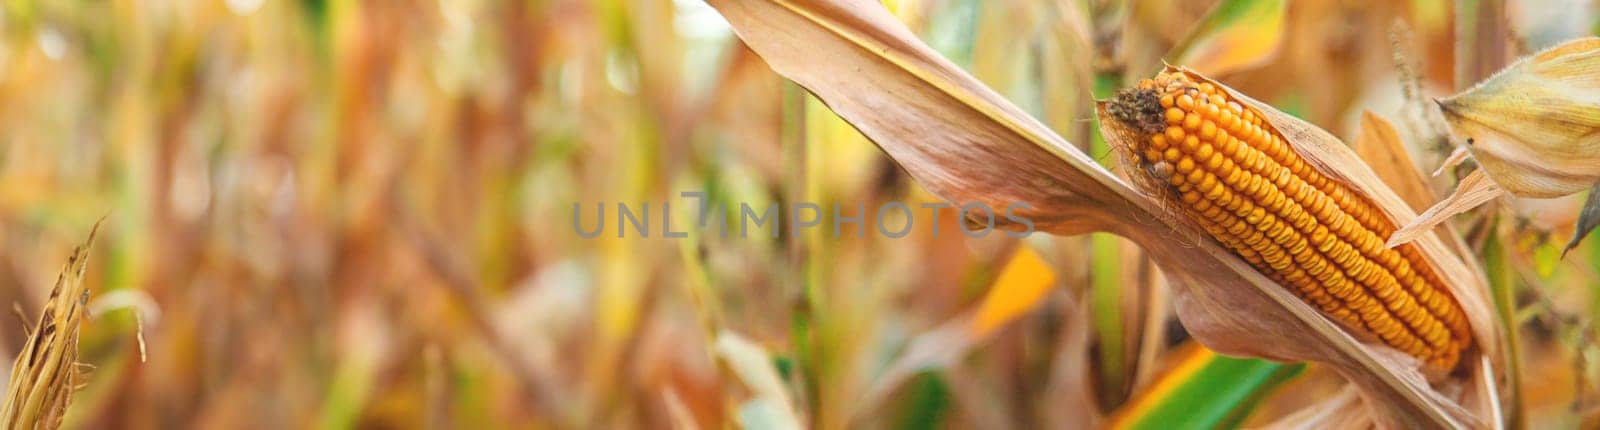 Corn harvest on the field. Selective focus. by yanadjana